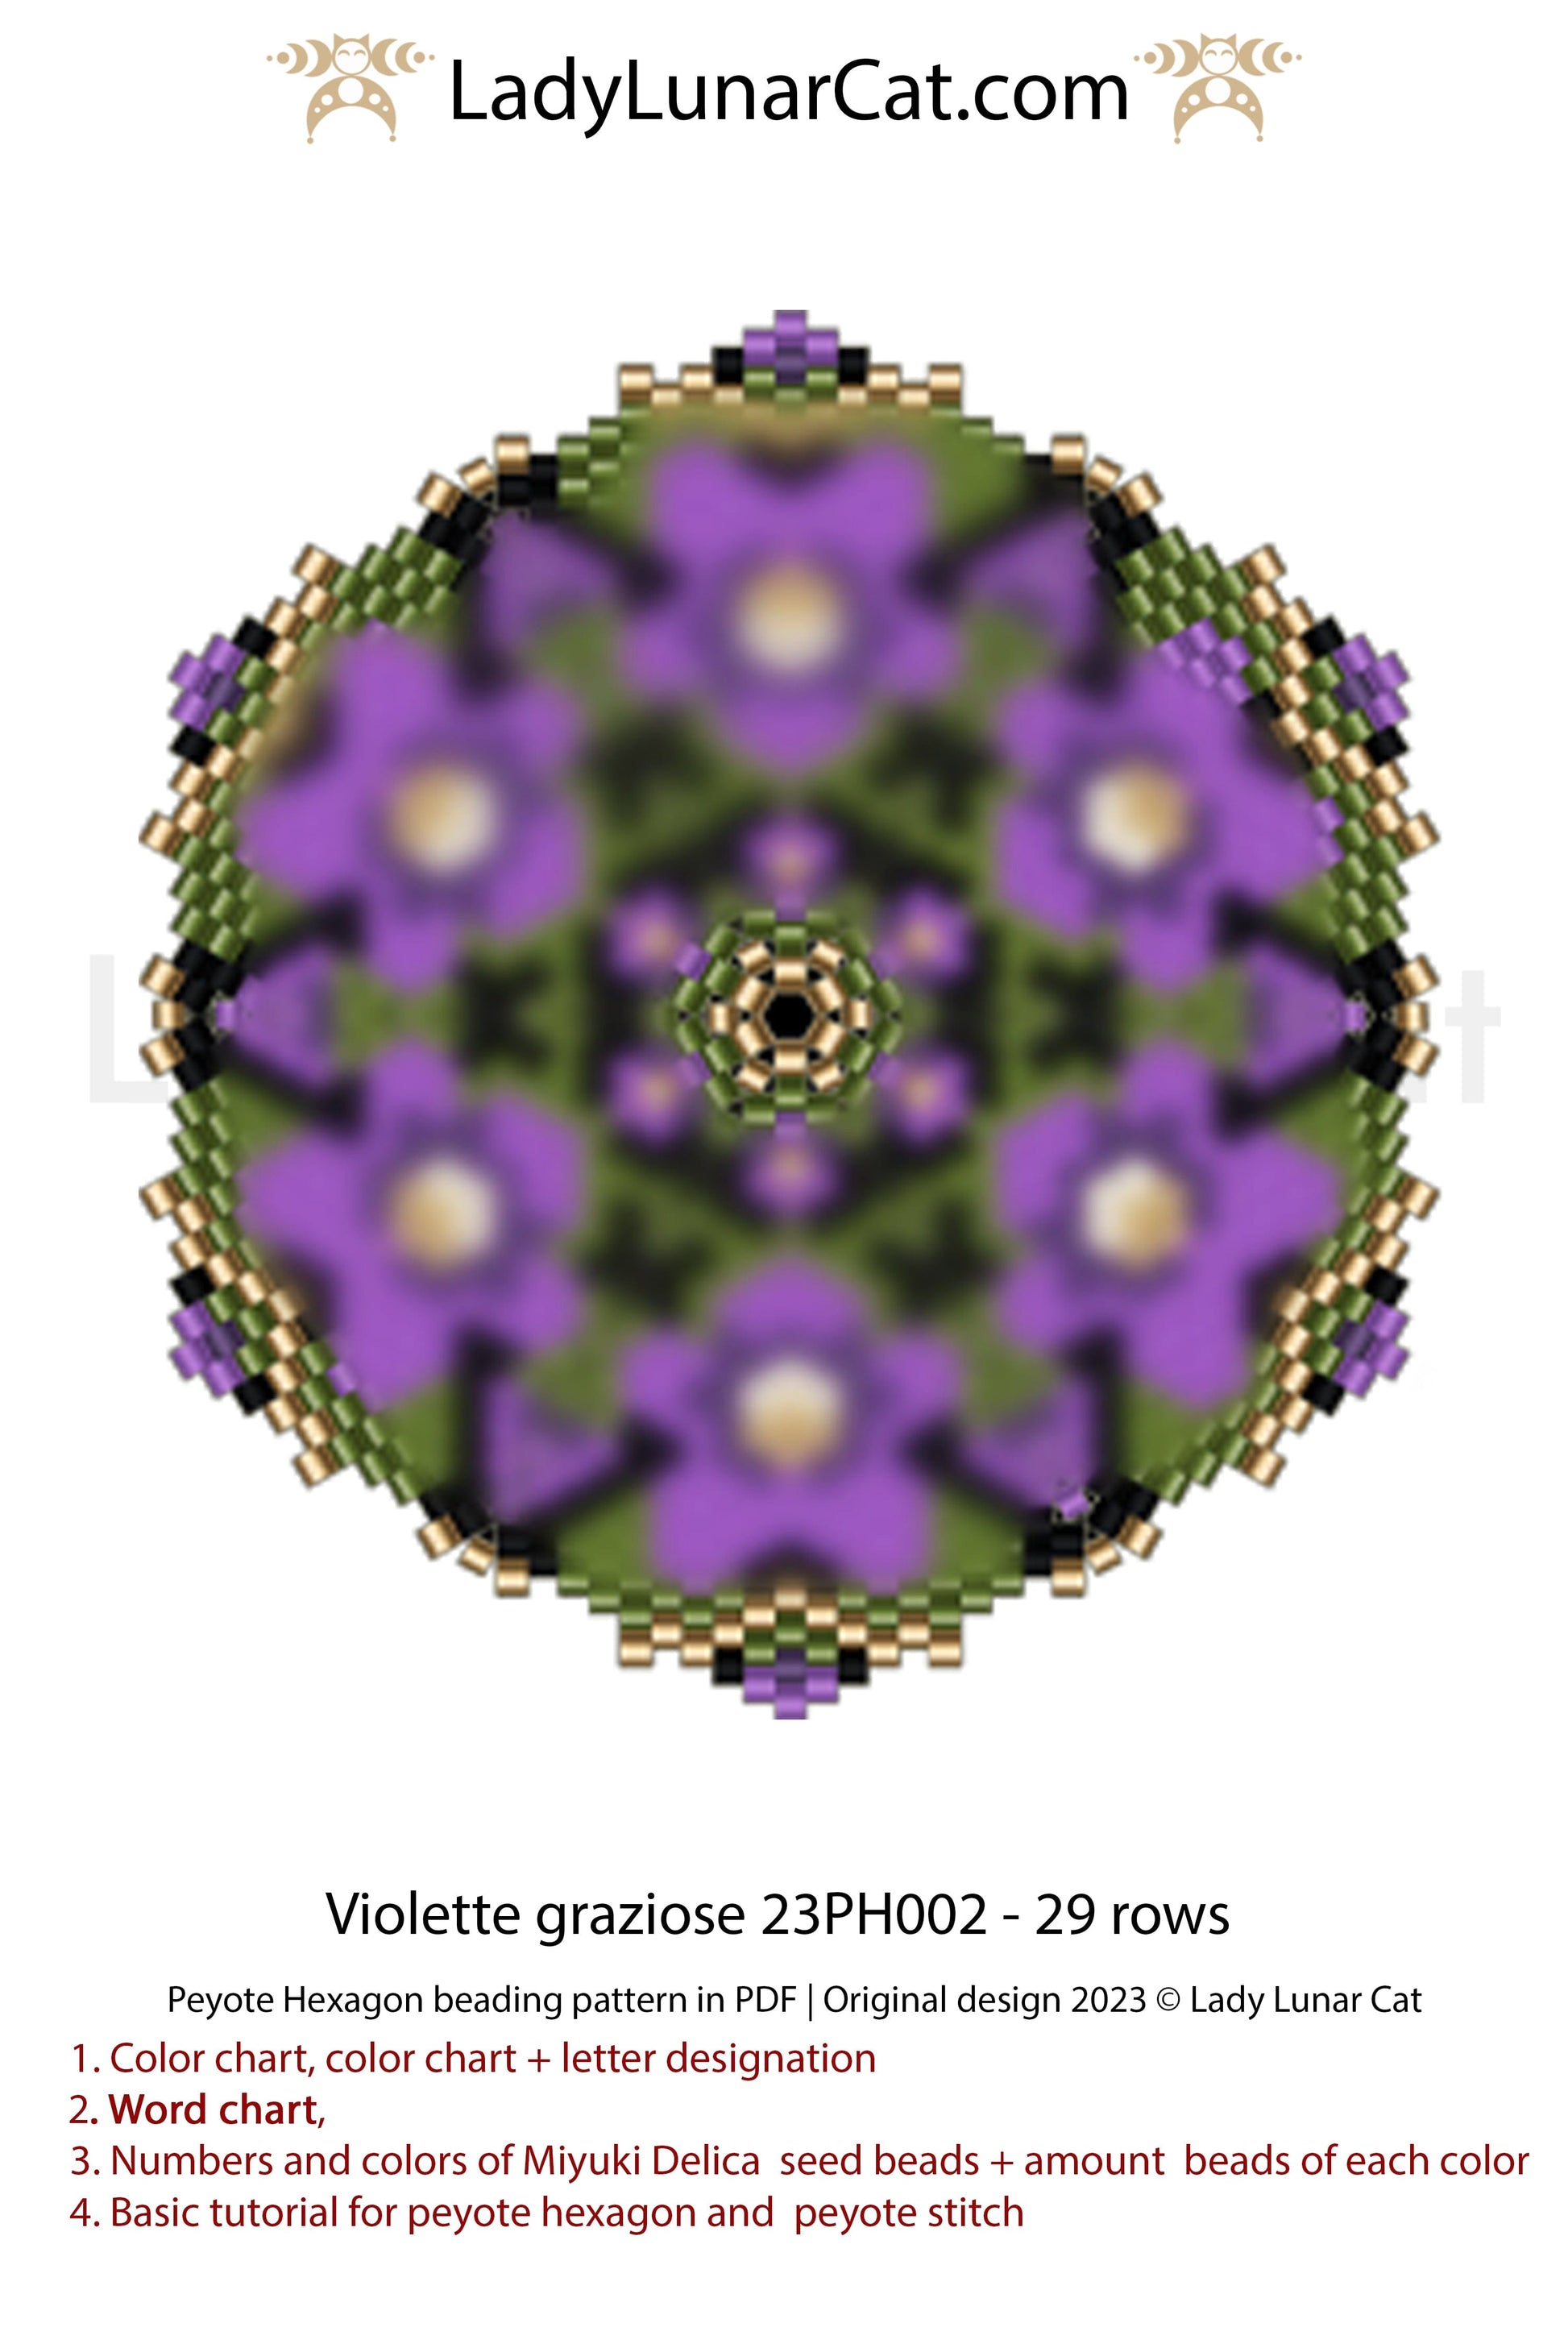 Copy of Peyote hexagon pattern for beading Spiderweb 22PH006 LadyLunarCat